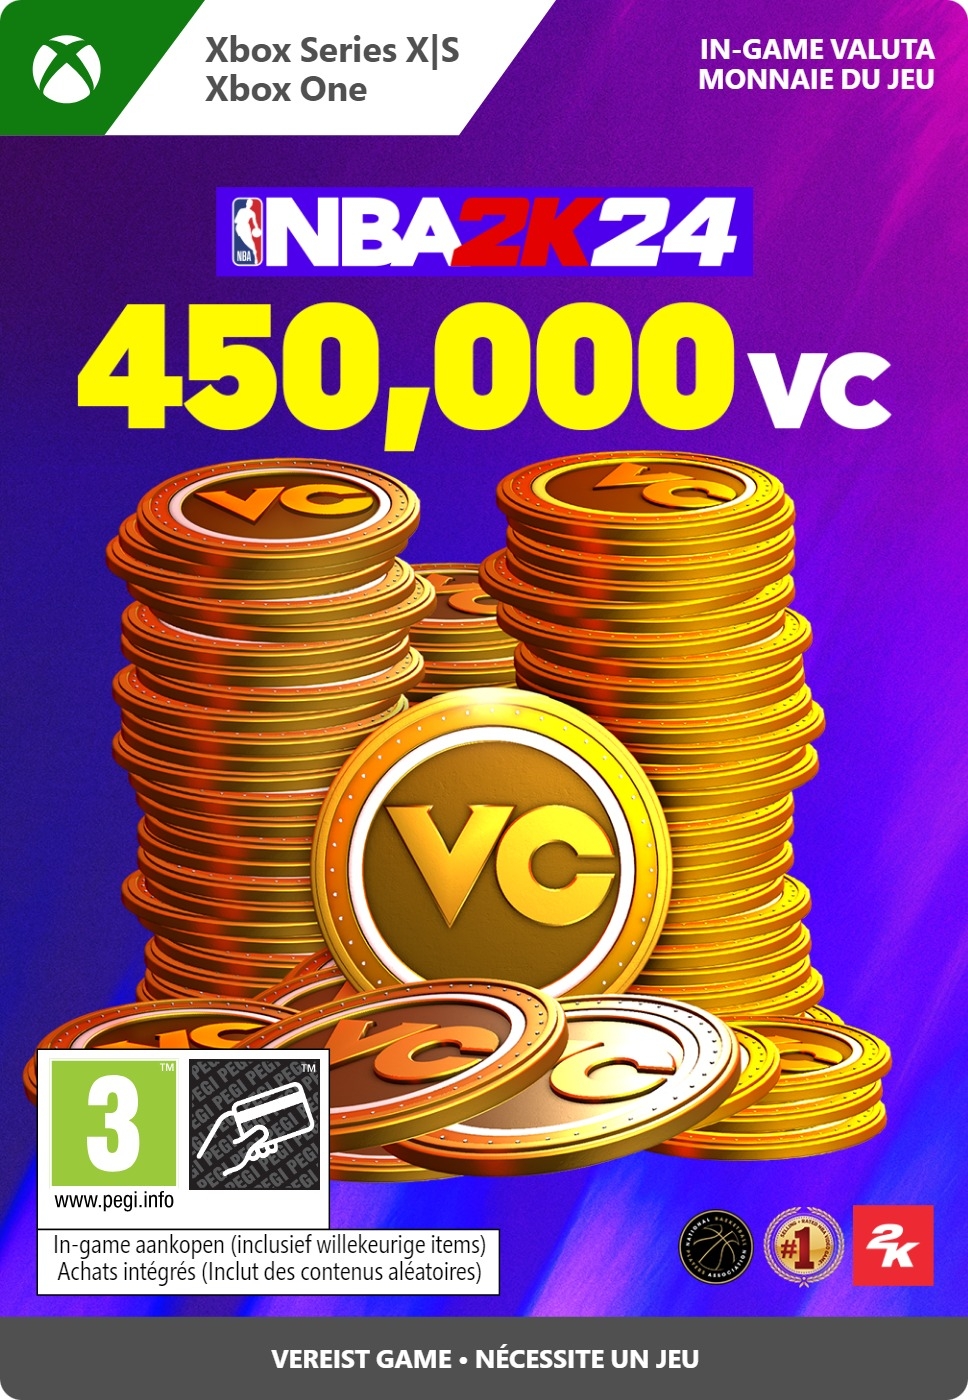 450.000 Xbox NBA 2K24 VC - Xbox Series X|S/One (direct digitaal geleverd)